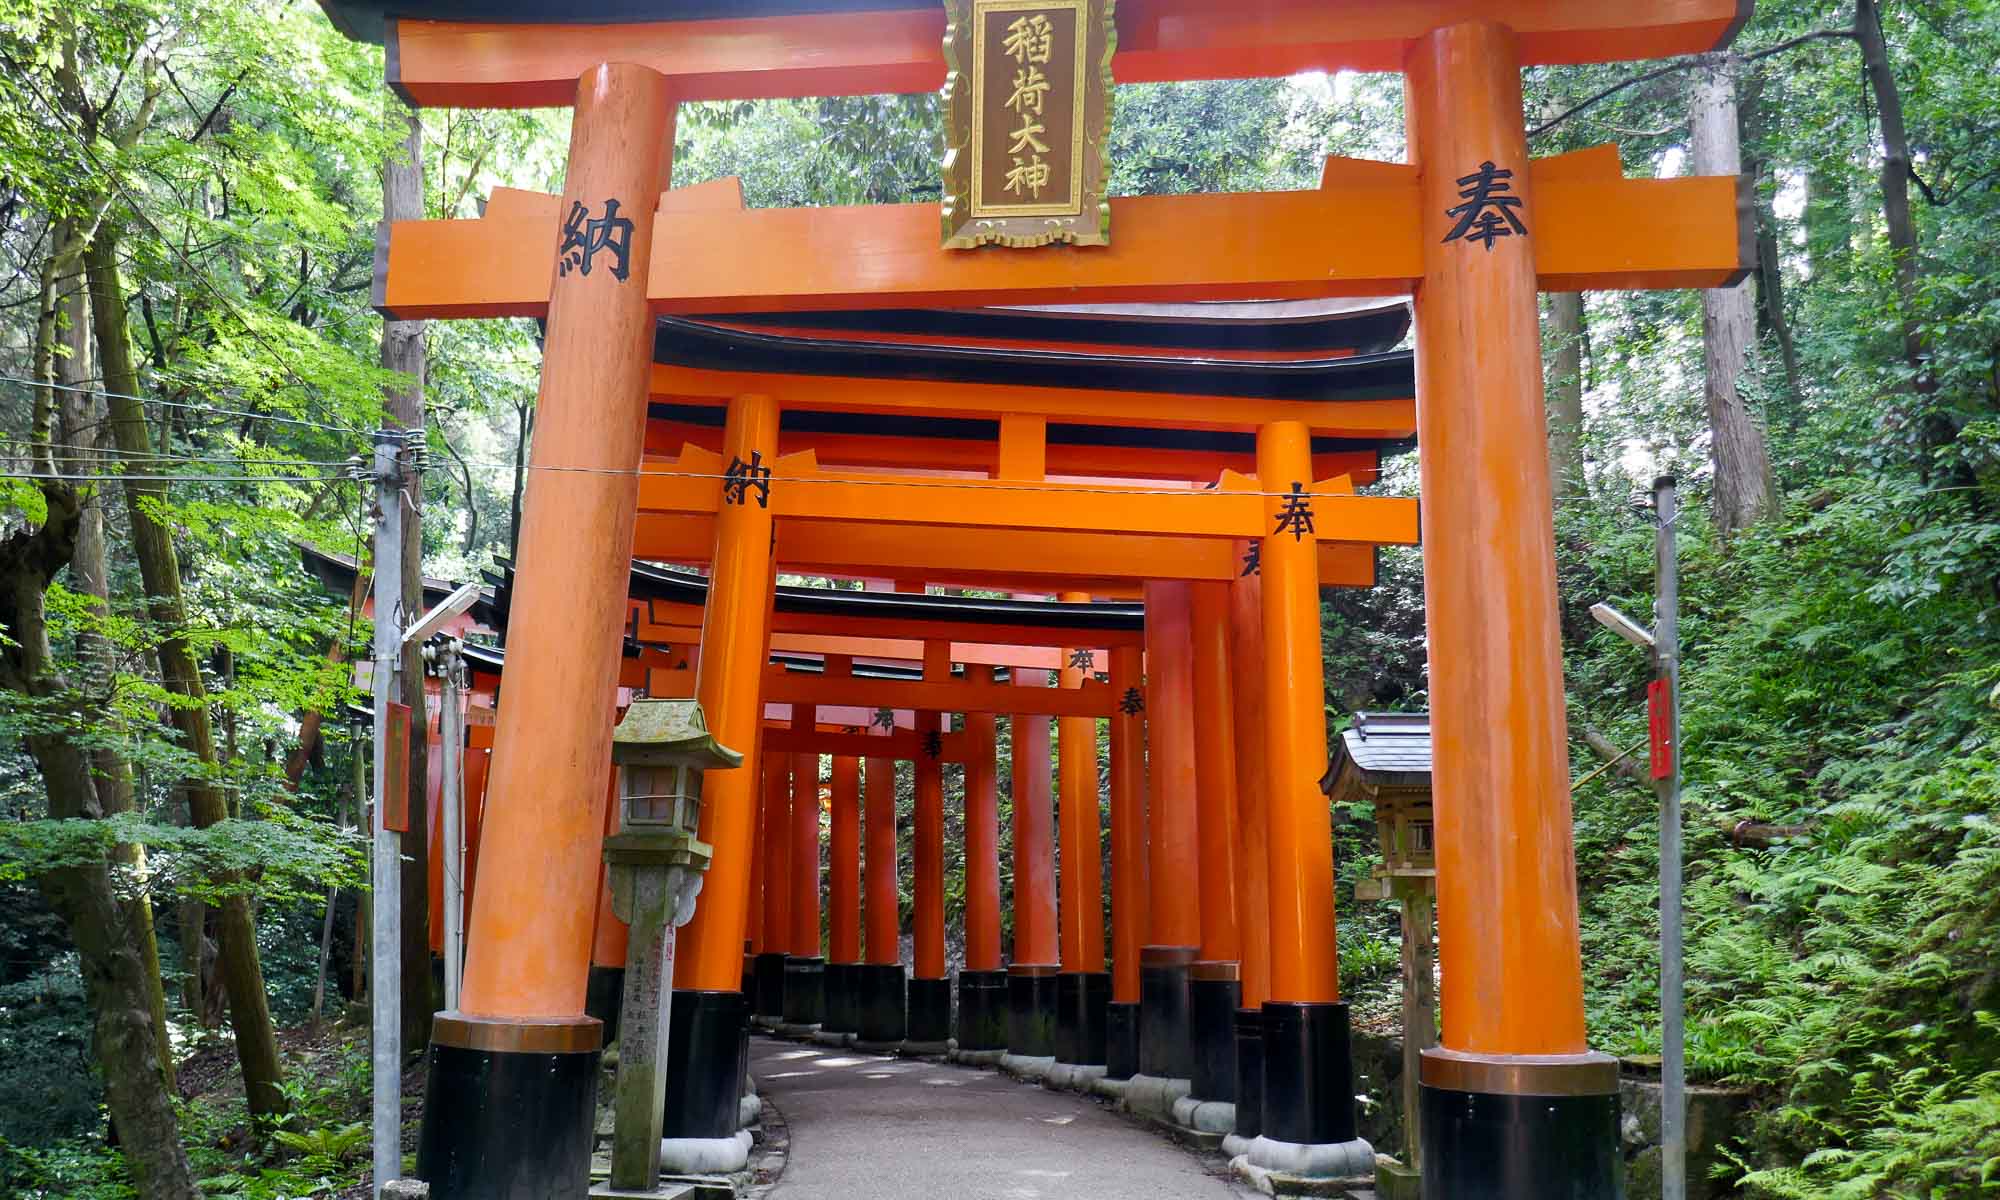 A set of large torii